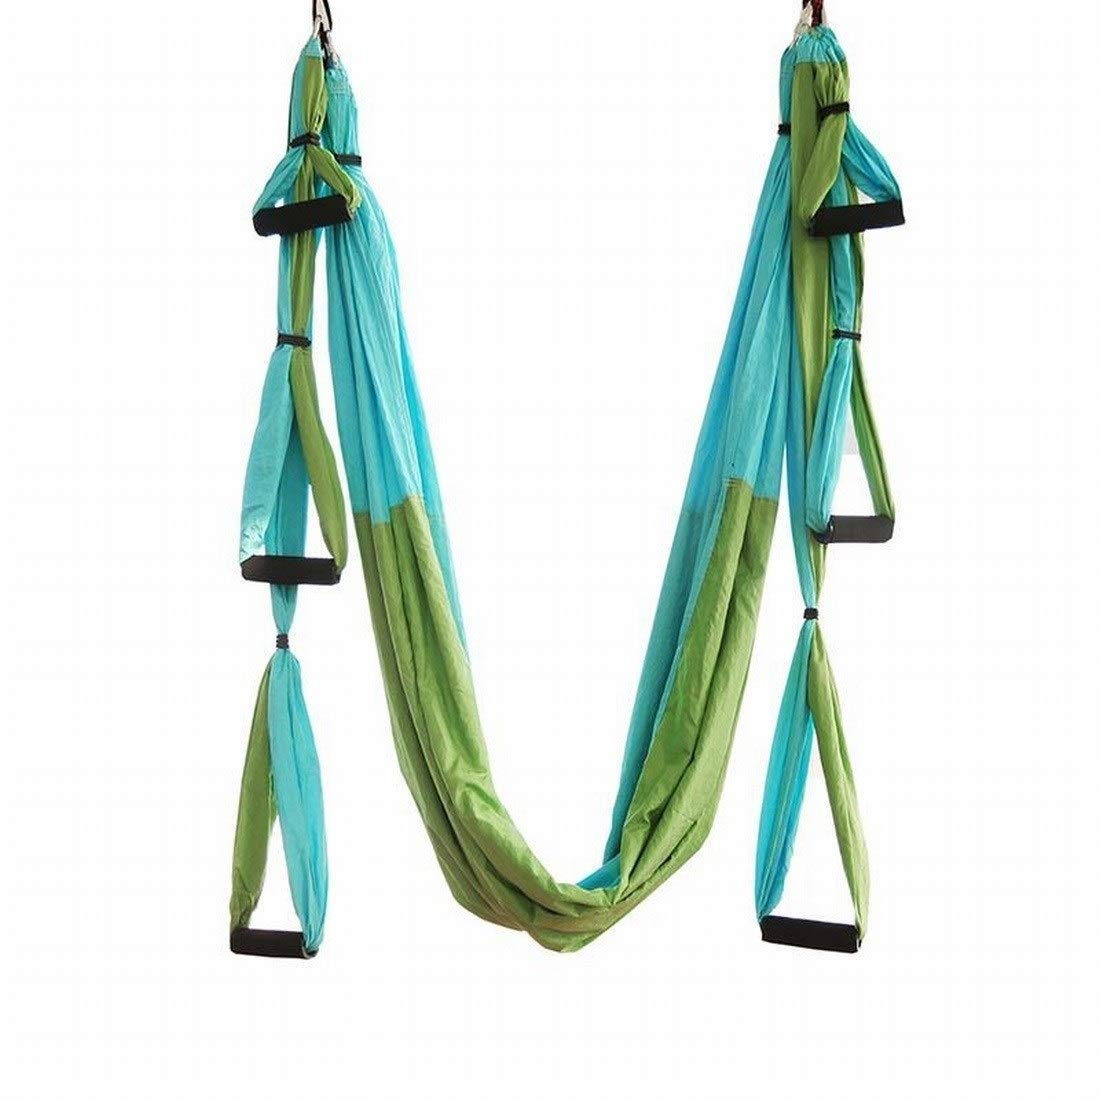 Kajuer Aerial Yoga Swing Set with Extension Straps